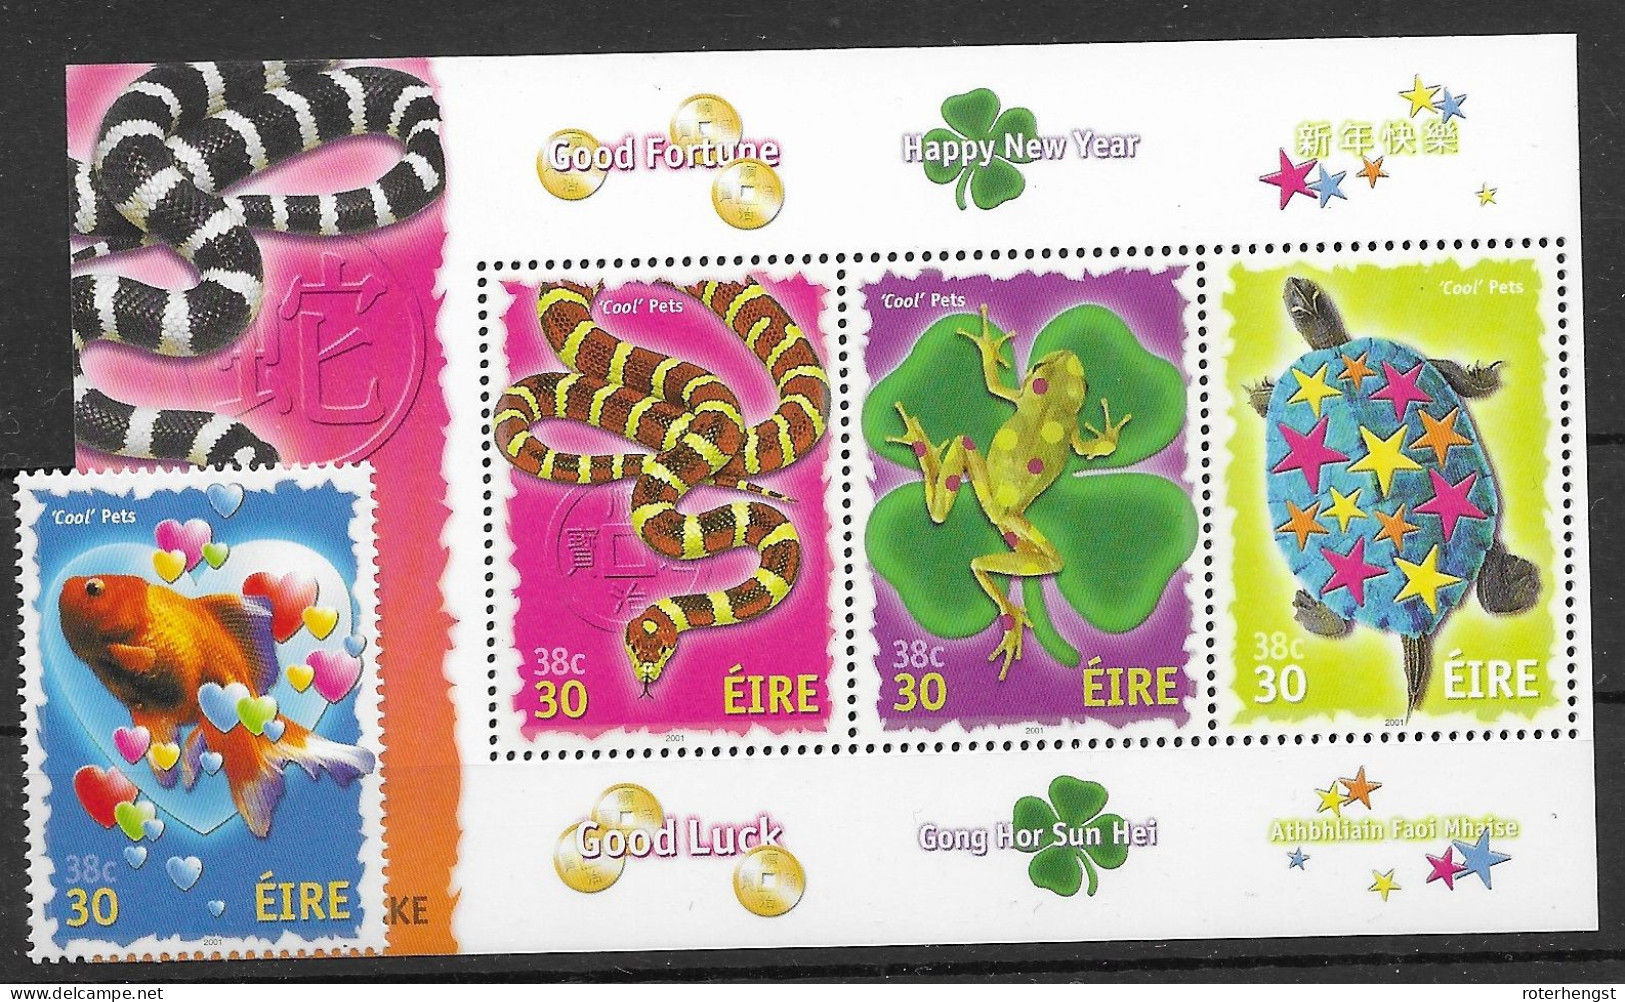 Ireland Sheet And Fish Stamp Mnh ** 2001 Snake Frog Turtle - Ungebraucht